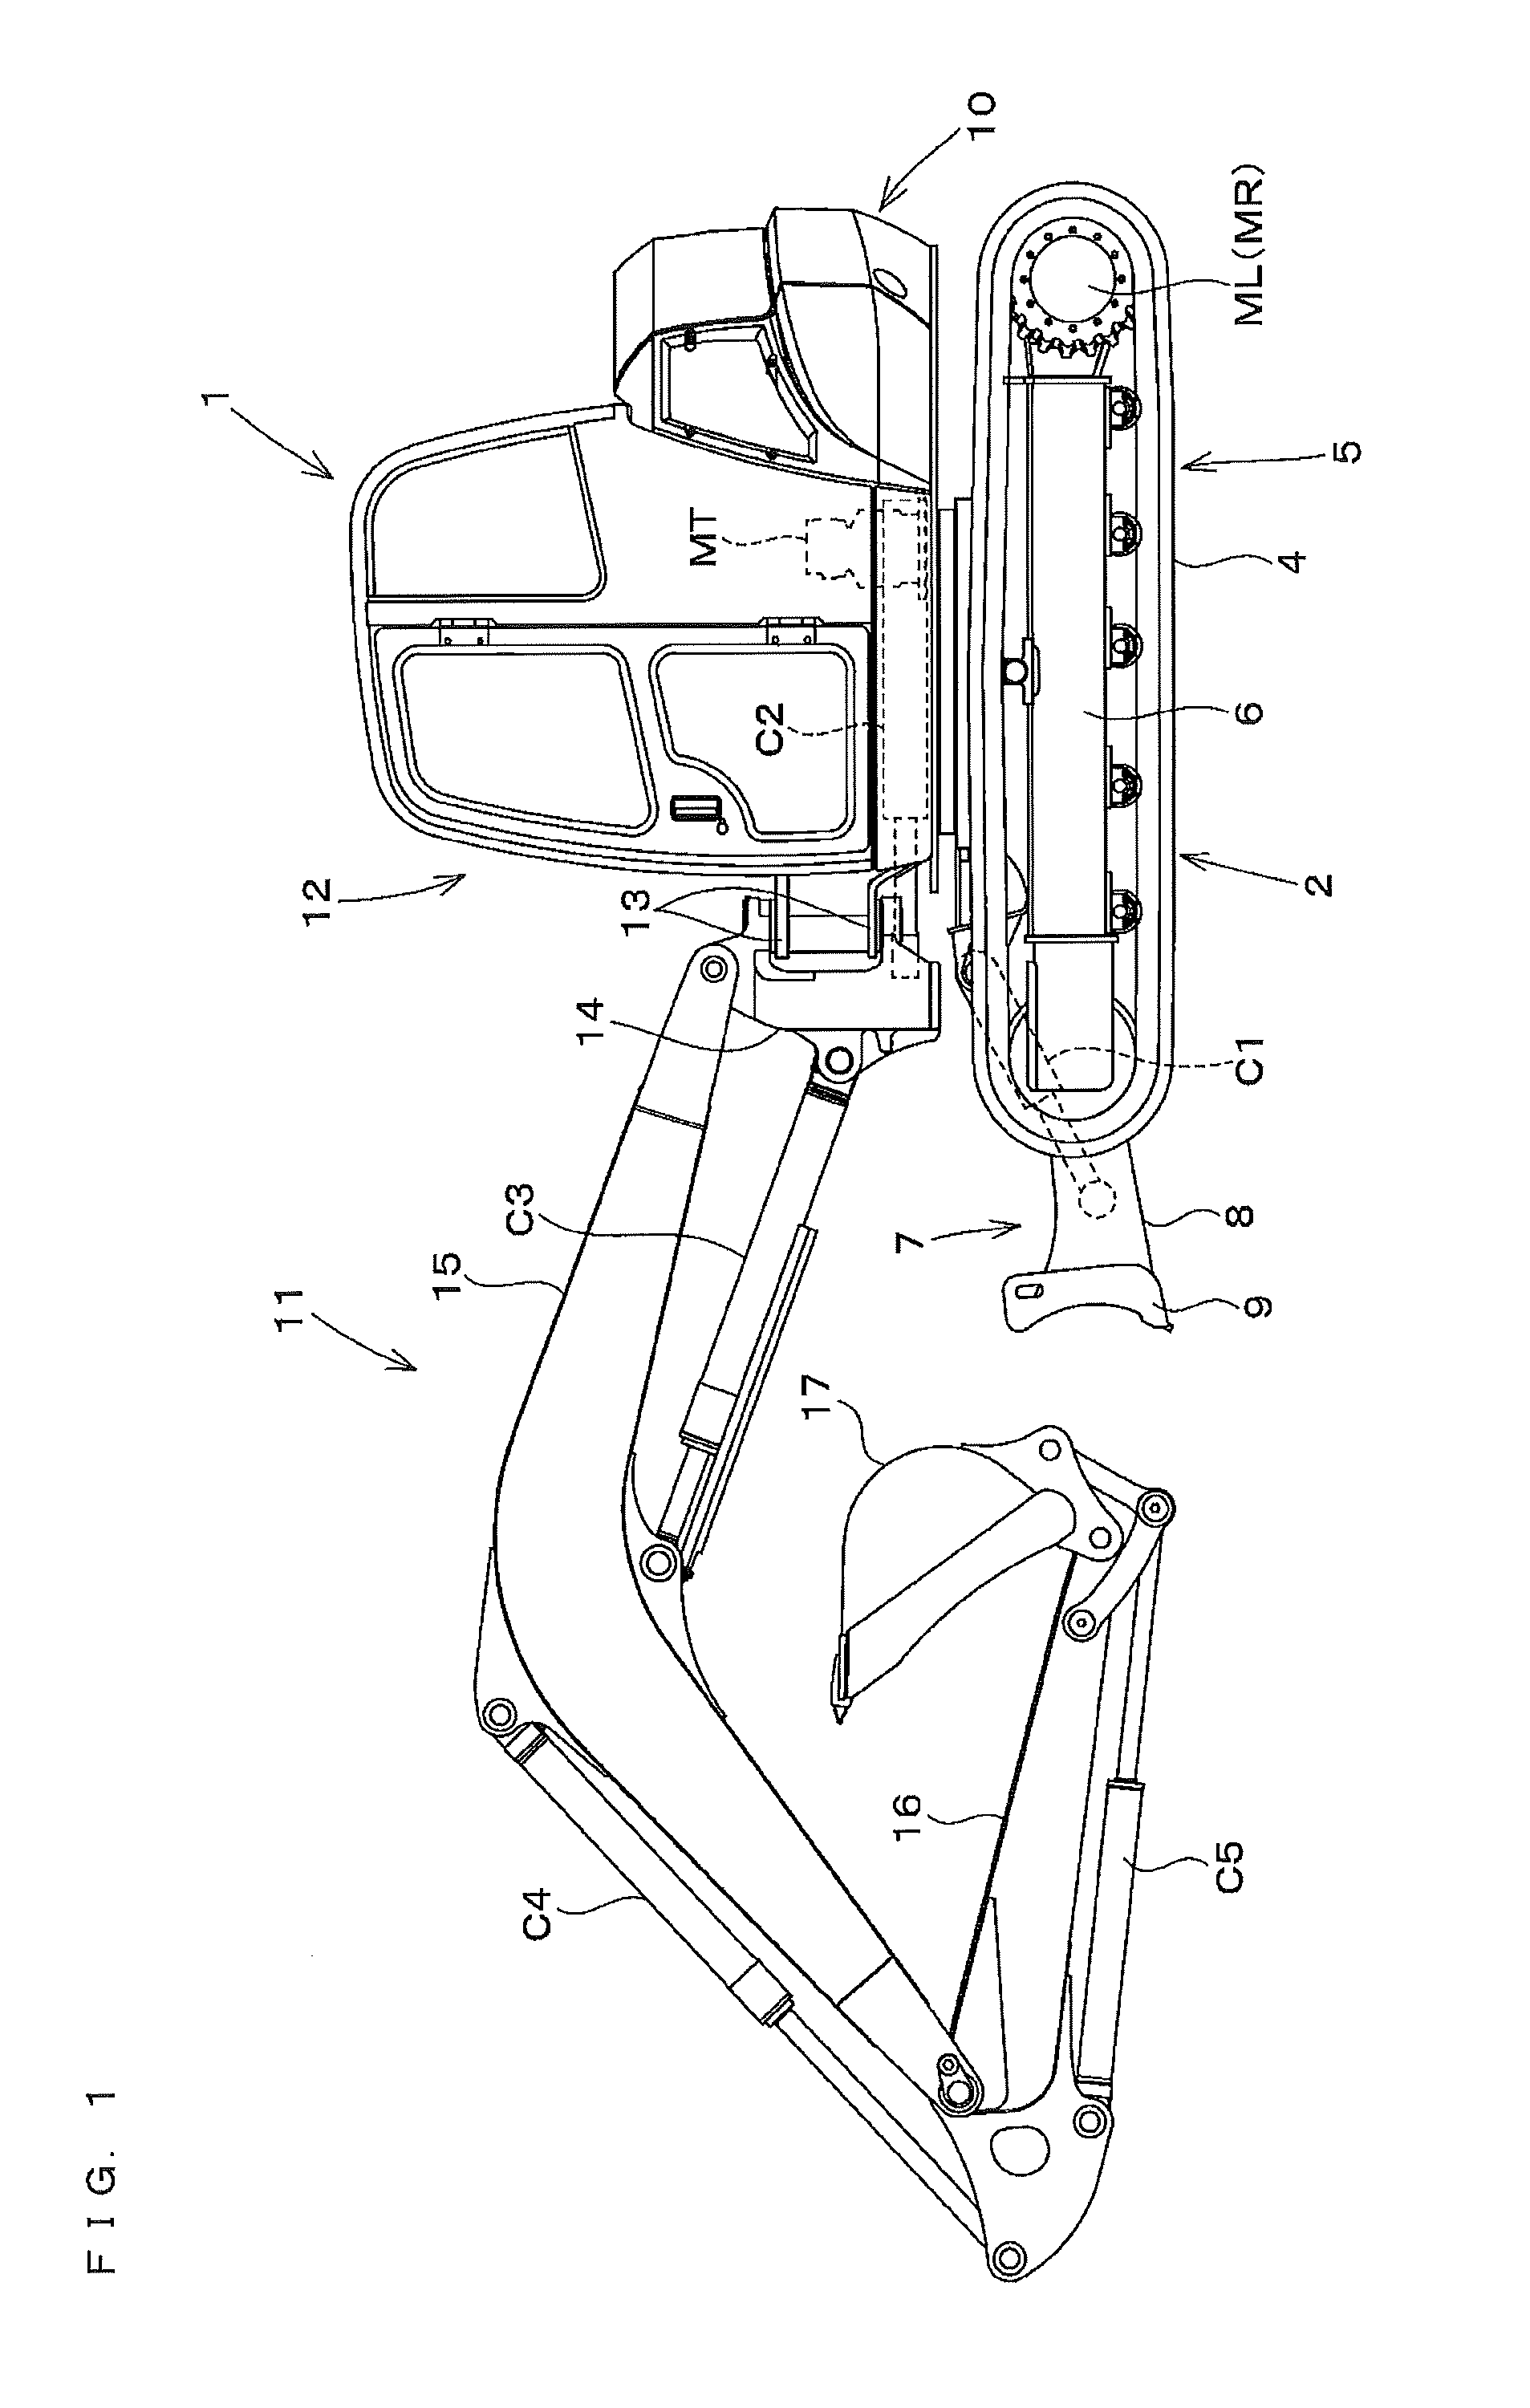 Hydraulic system for working machine